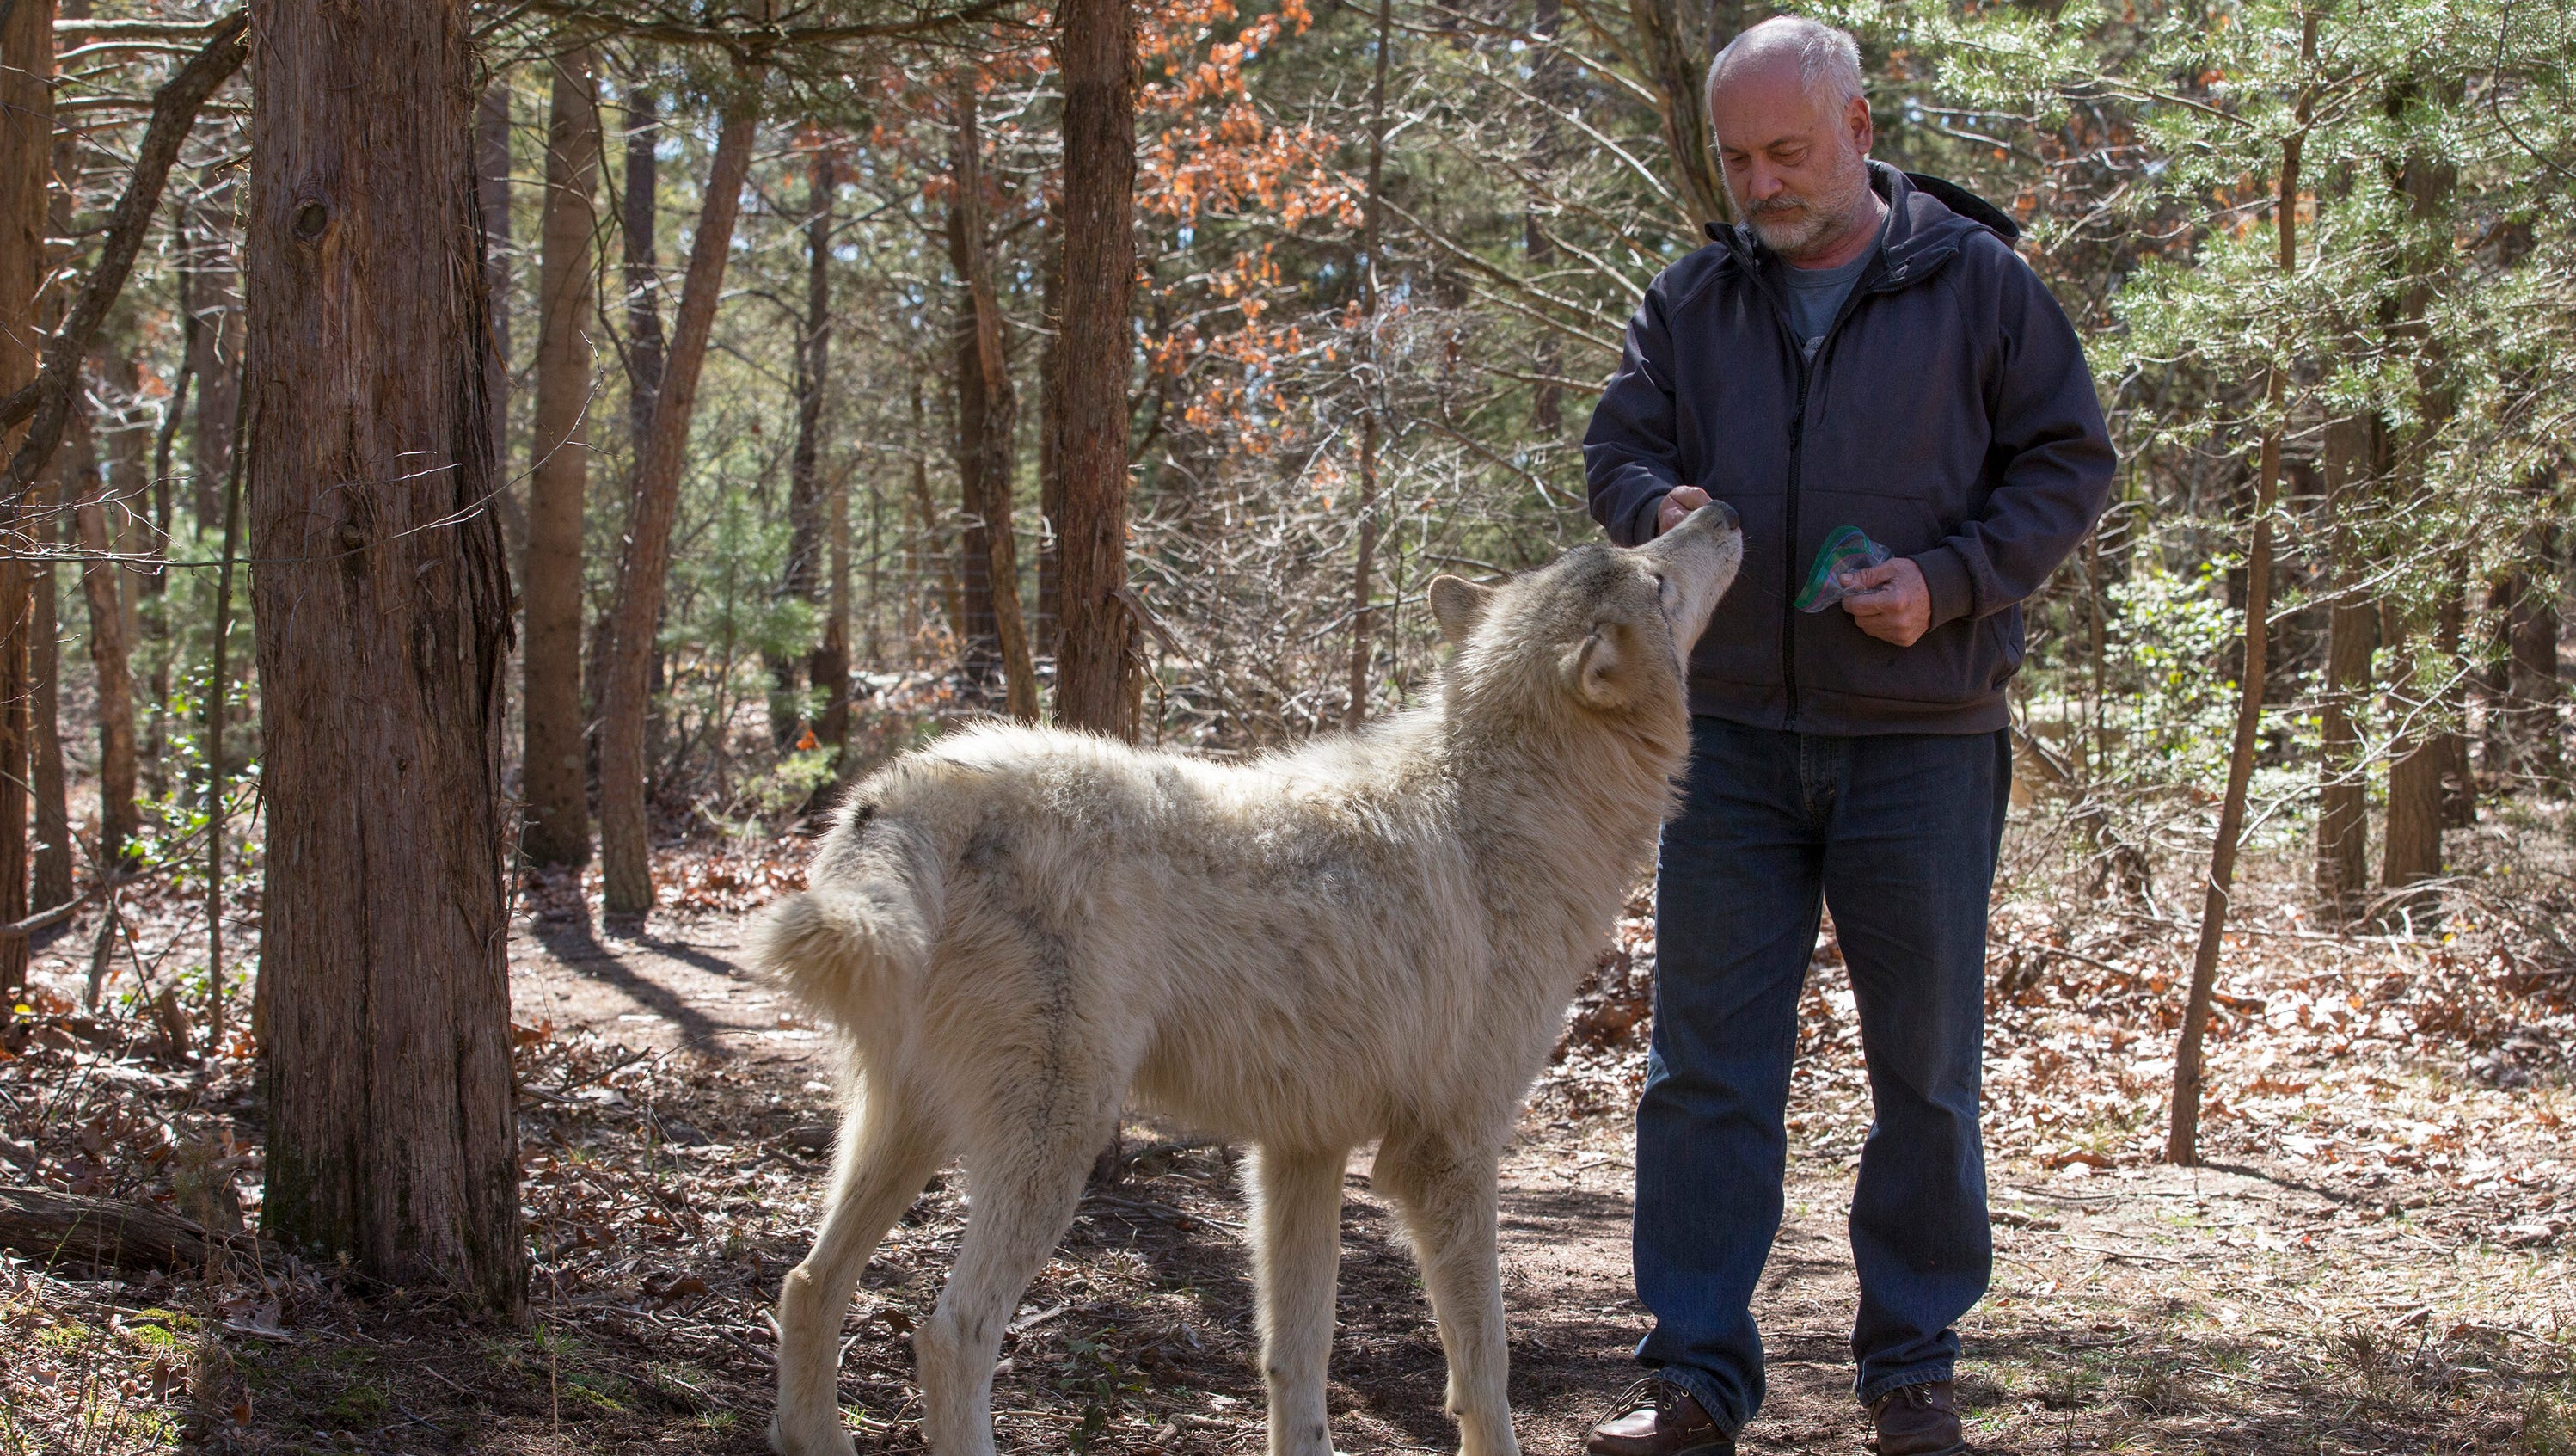 Desafío Flecha cuenta Jackson NJ Howling Woods Farm sanctuary wolfdogs were starved: Lawsuit